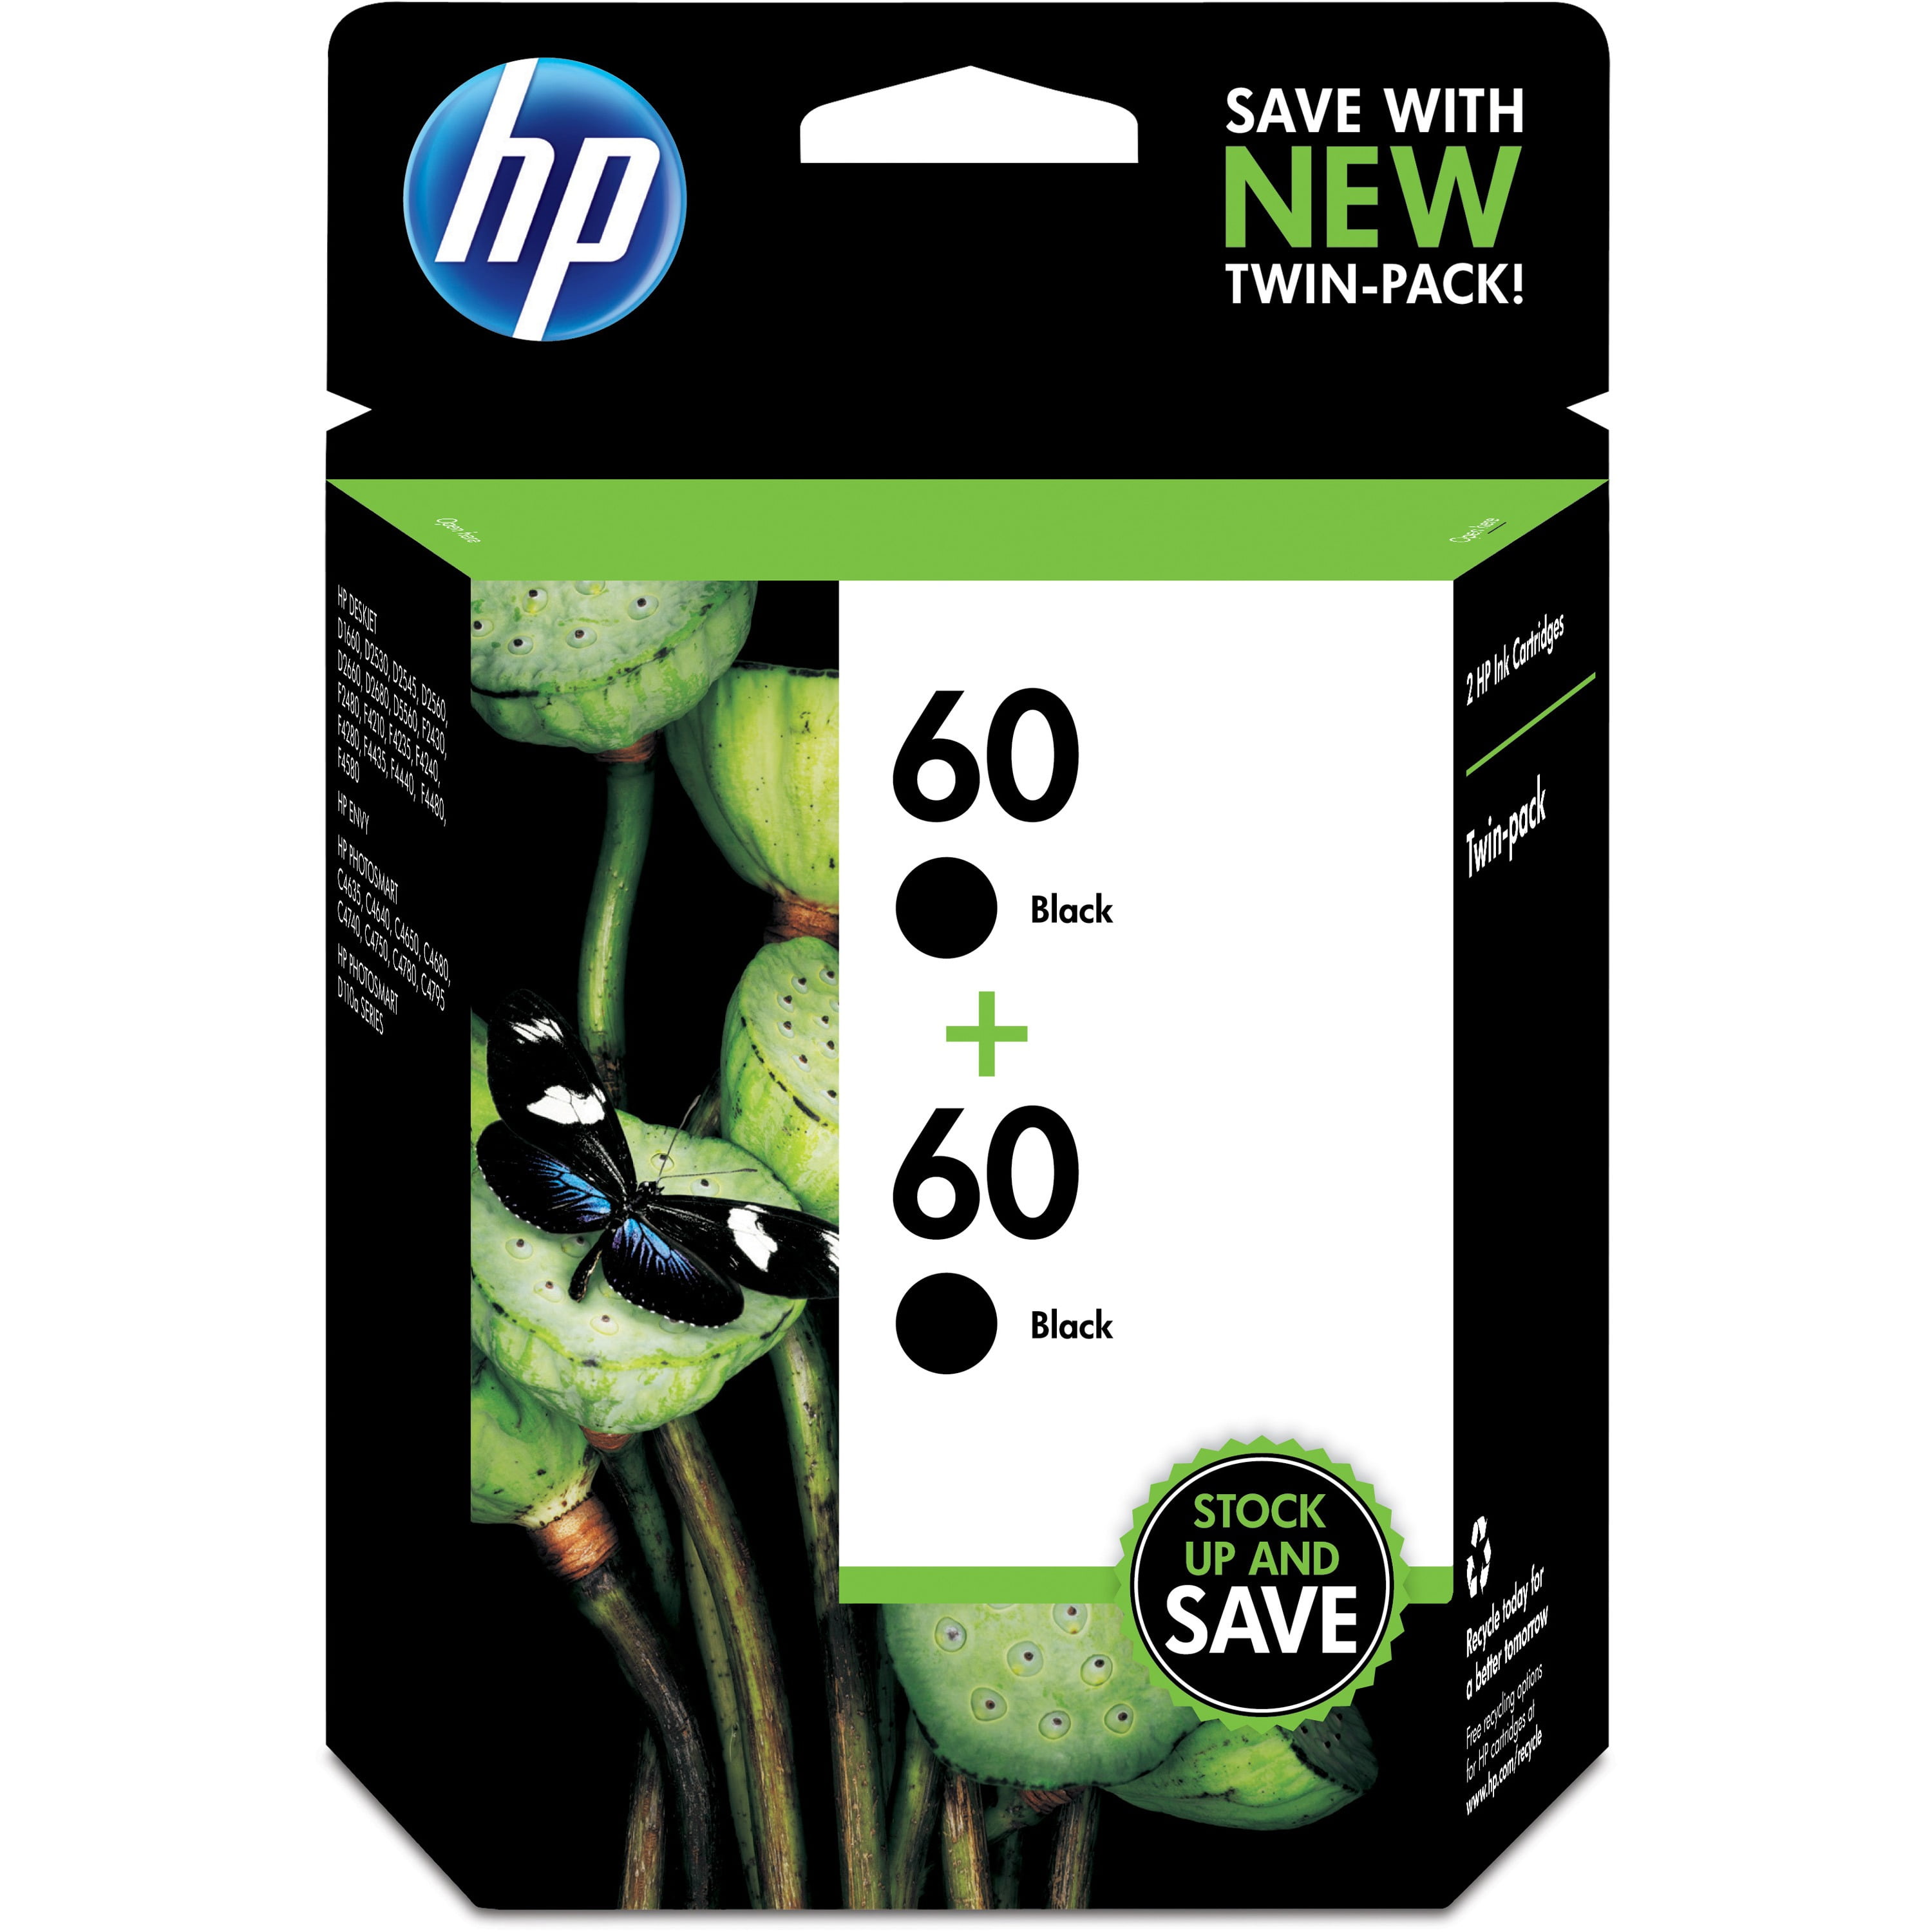 HP 60 Ink Cartridges - Black, 2 Cartridges (CZ071FN) 